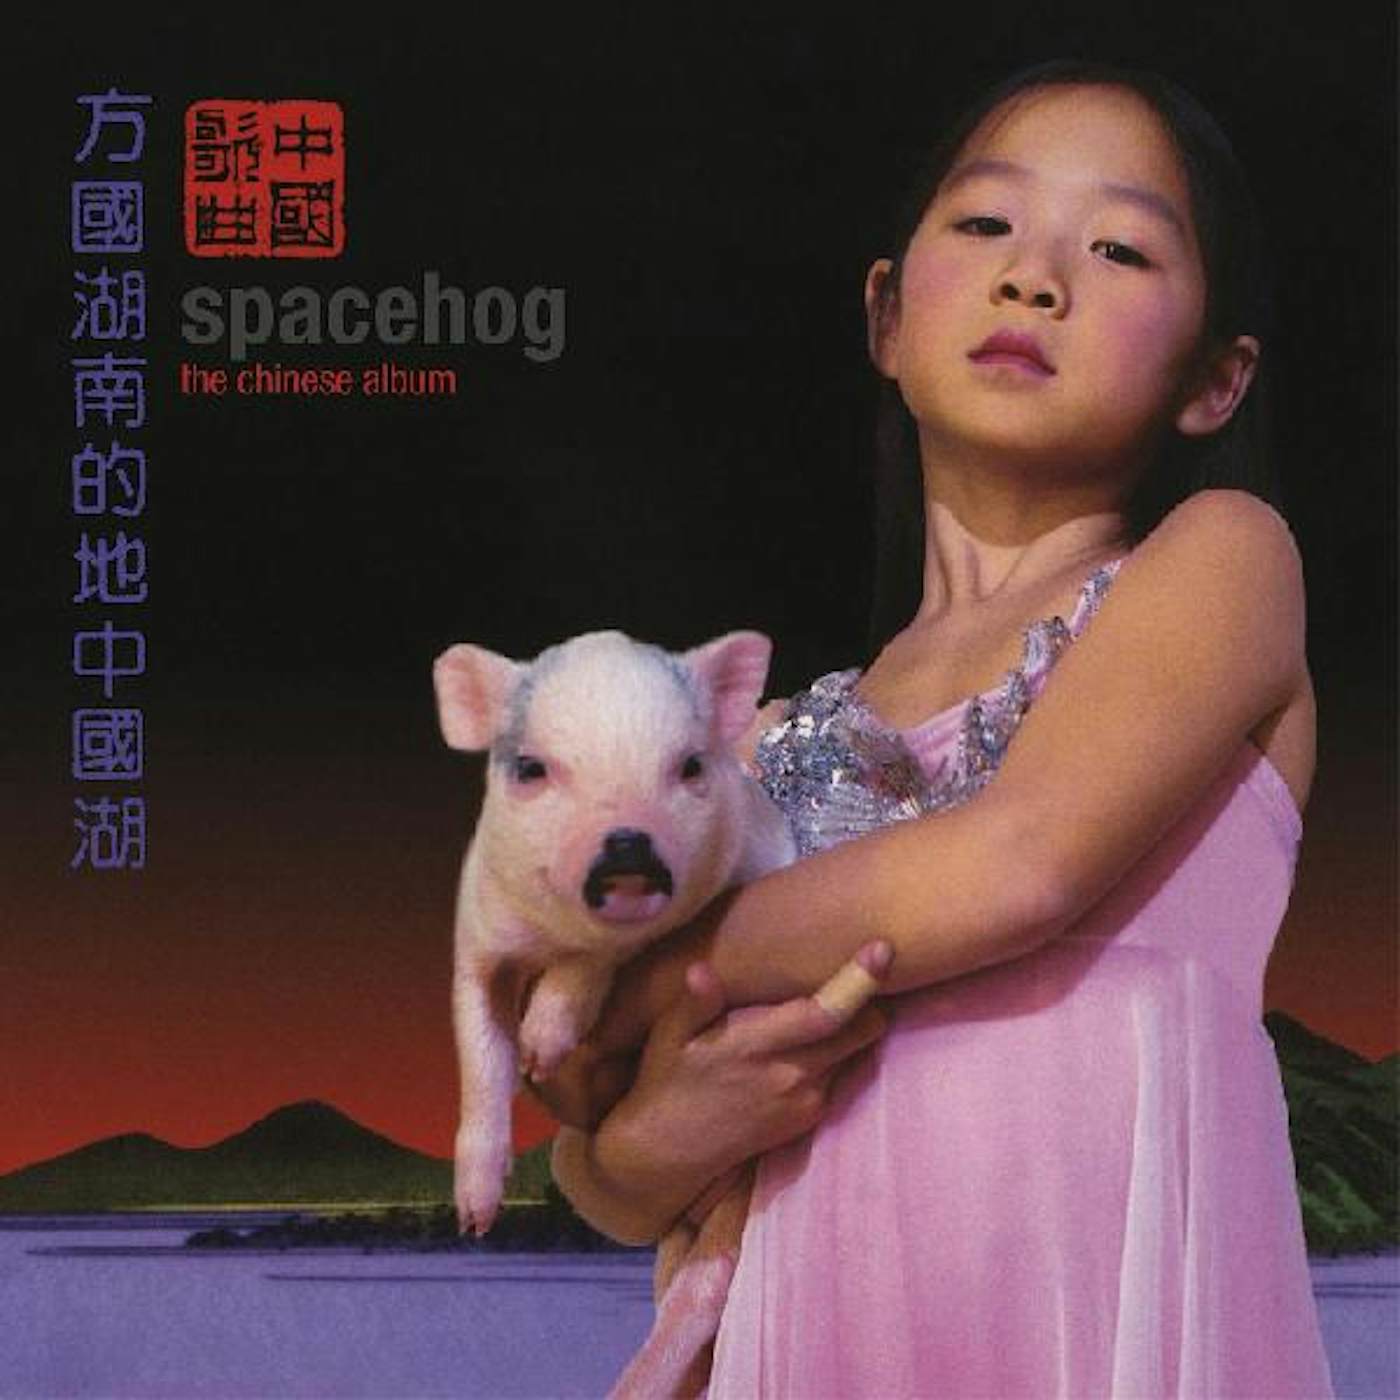 Spacehog The Chinese Album (Limited Maroon Vinyl Vinyl Record